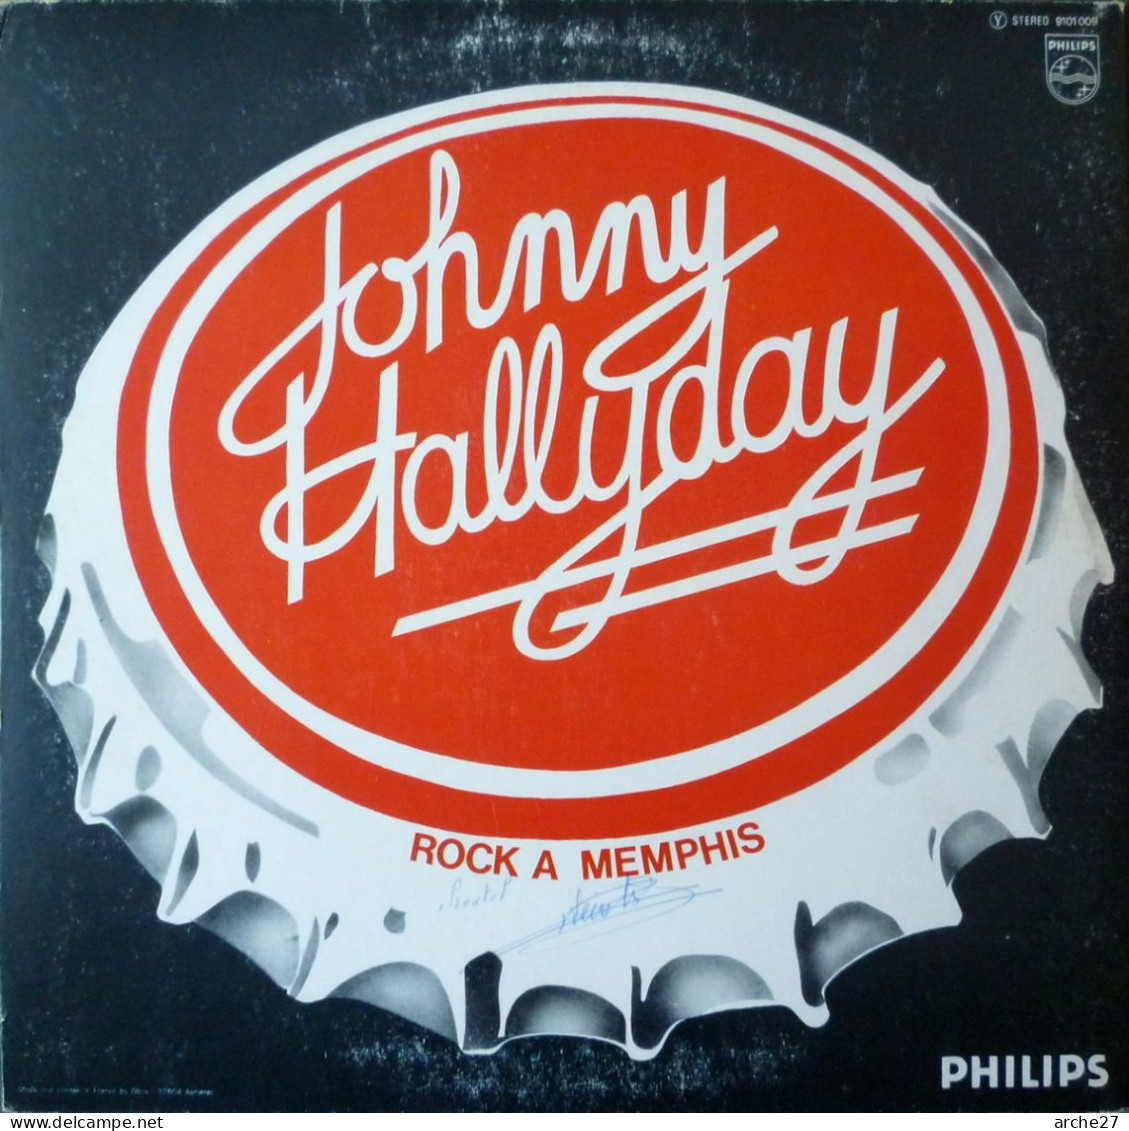 Vinyle Johnny Hallyday 467792